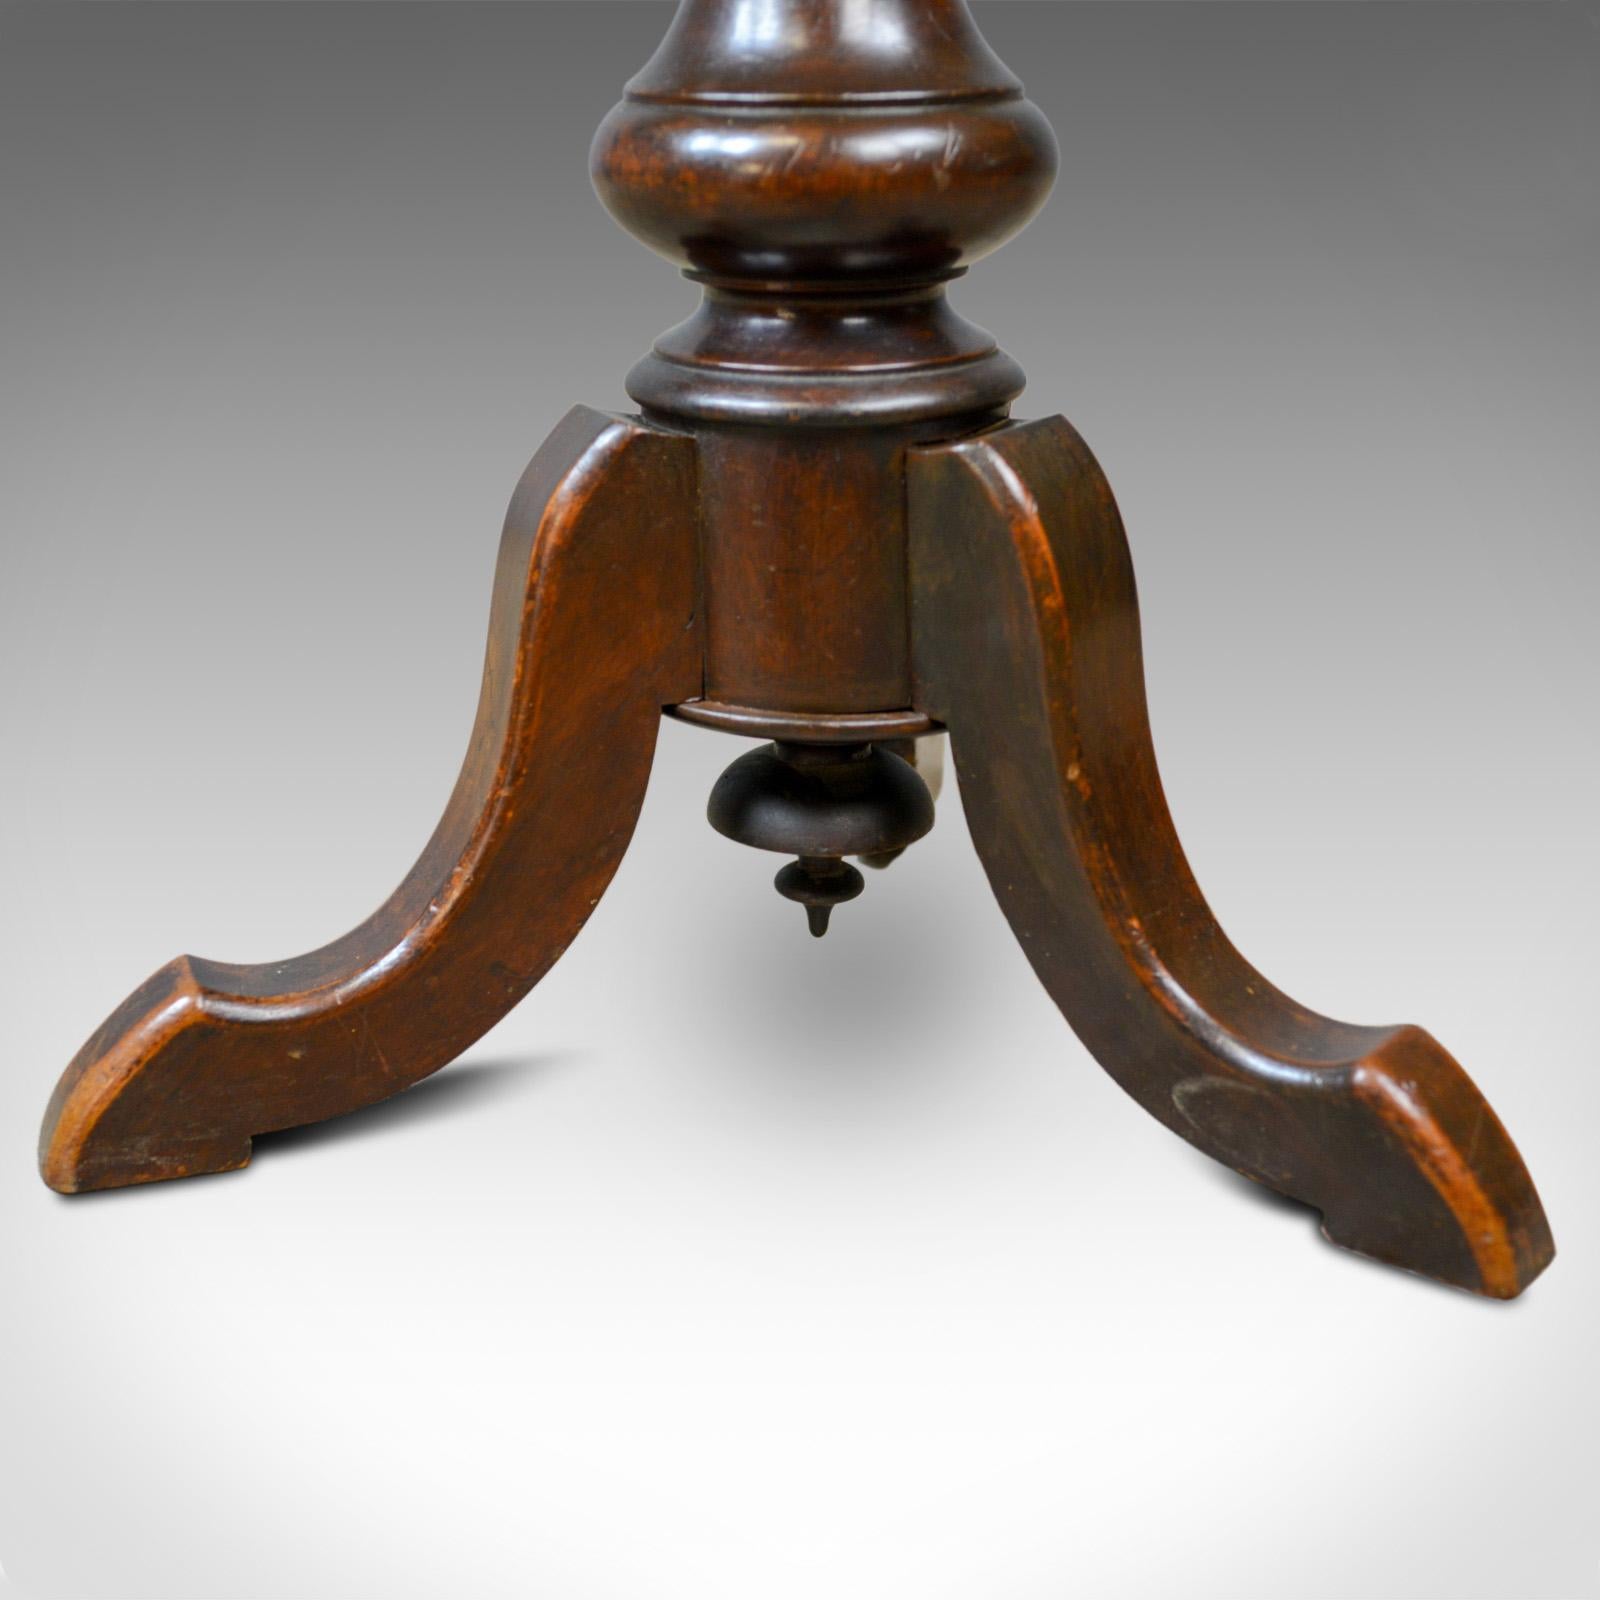 19th Century Adjustable Antique Piano Stool, English, Victorian, Walnut, Music, circa 1880